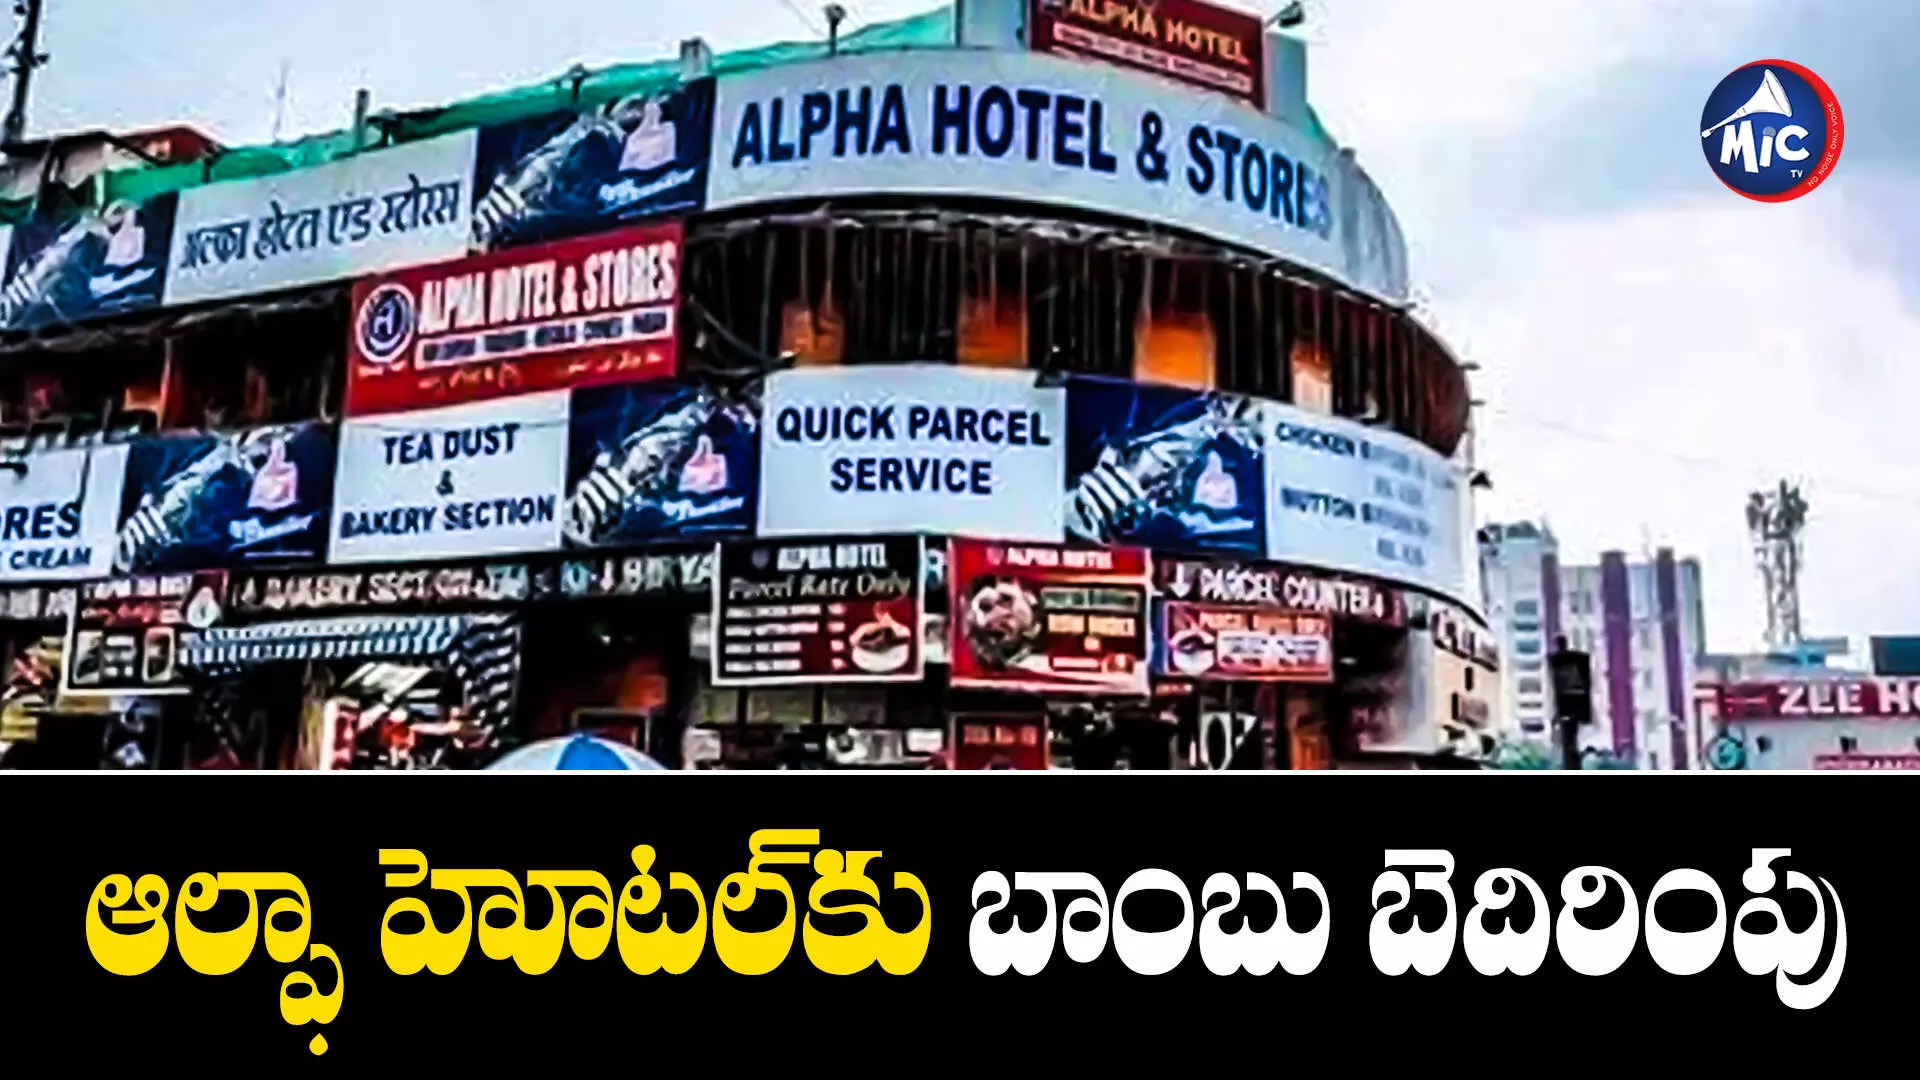 Alpha Hotel : సికింద్రాబాద్ ఆల్ఫా హోటల్‌కు బాంబు బెదిరింపు